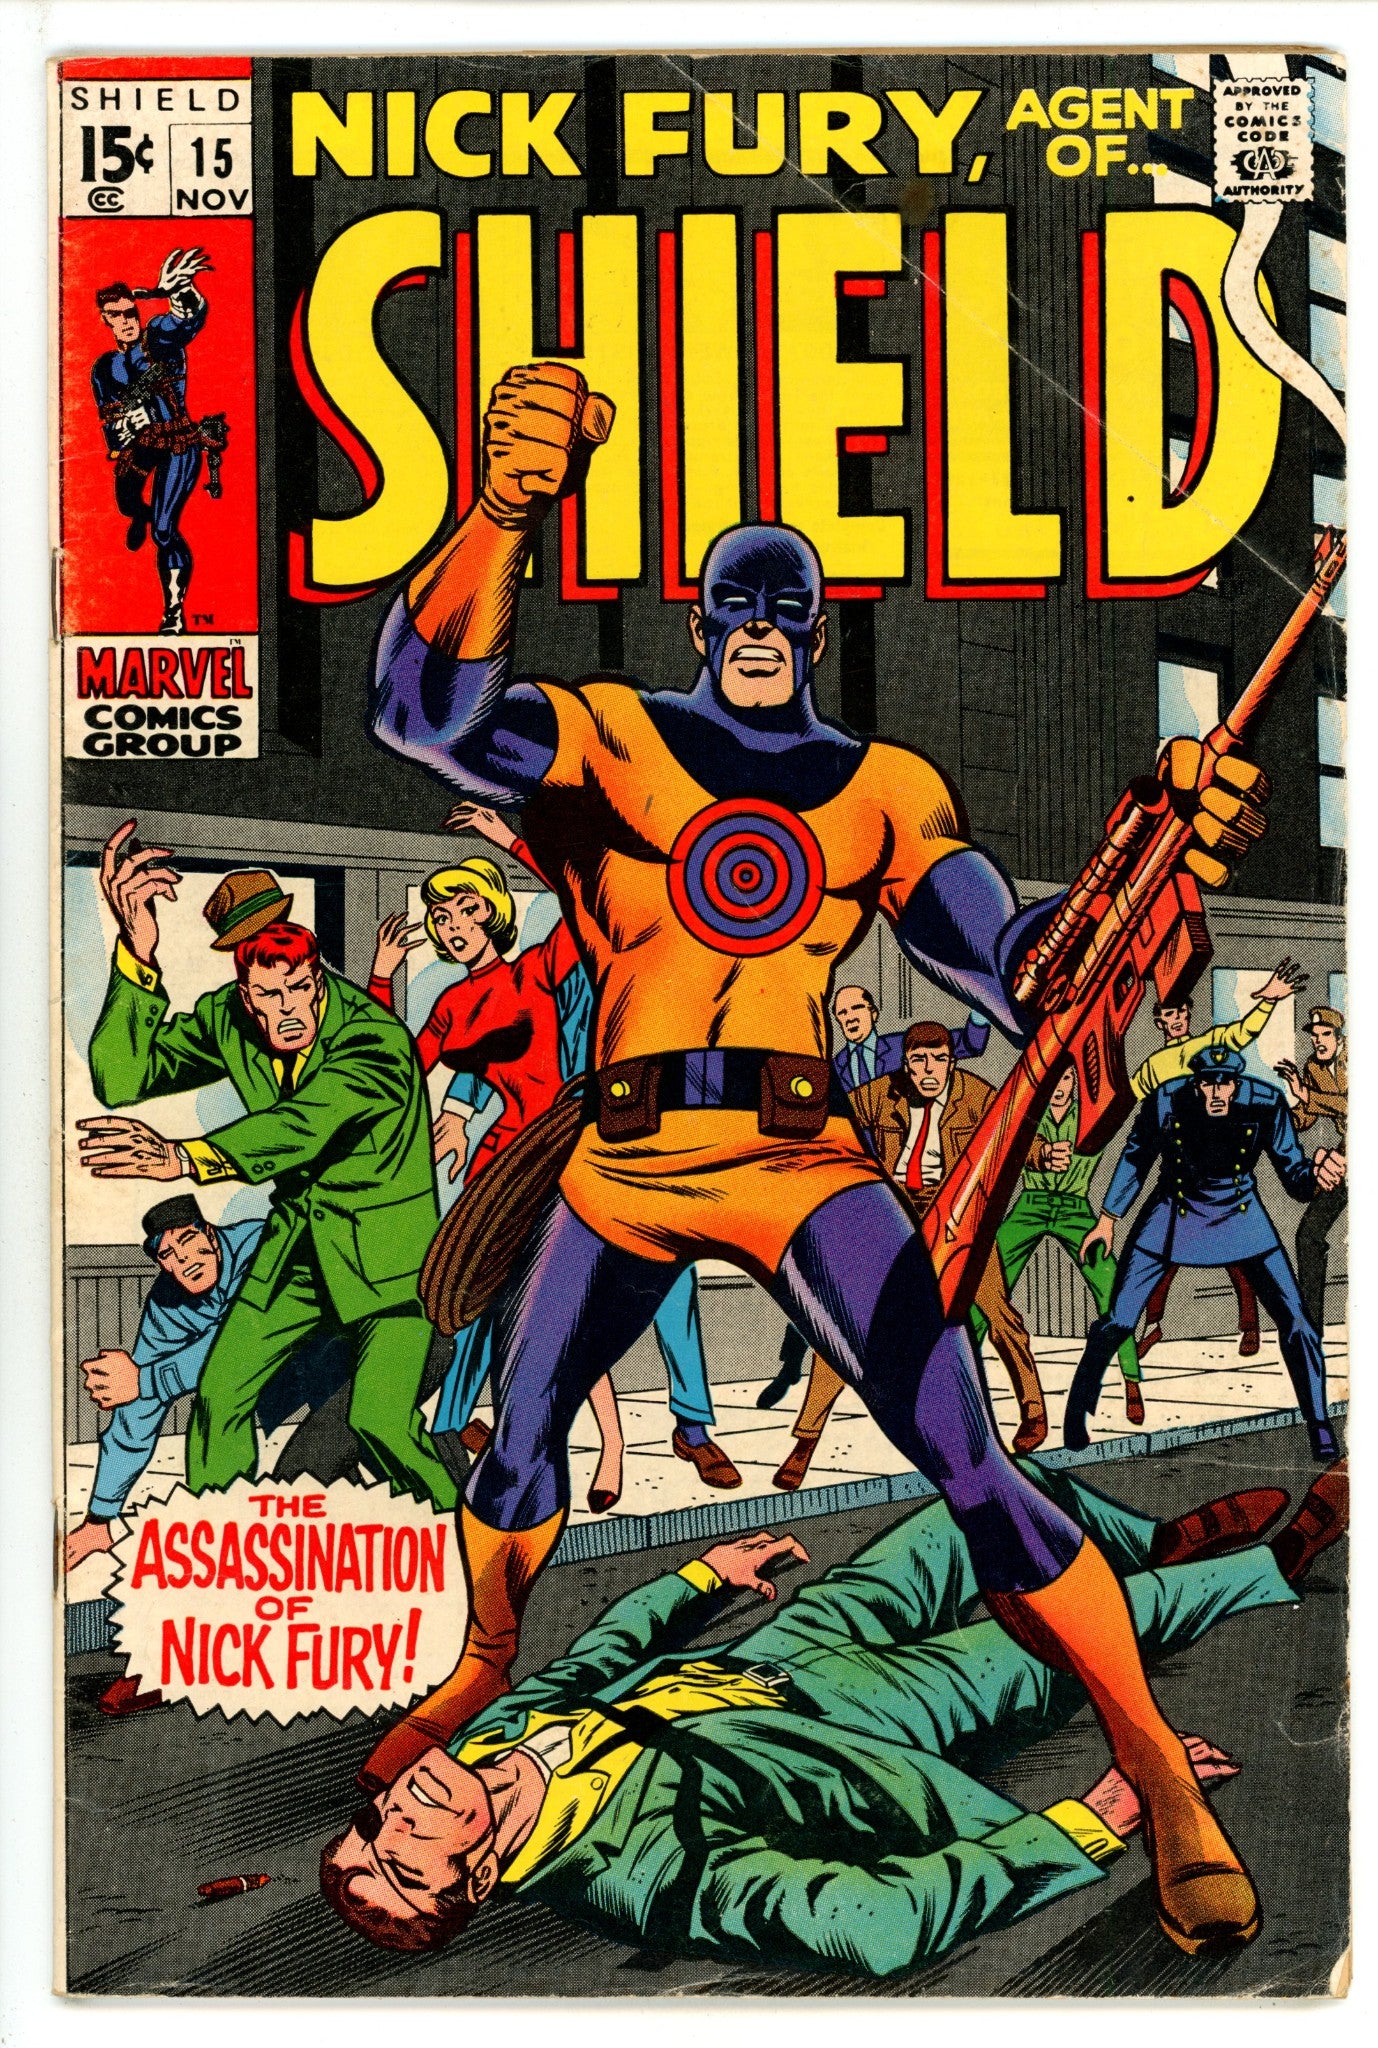 Nick Fury, Agent of SHIELD Vol 1 15 VG+ (4.5) (1969) 